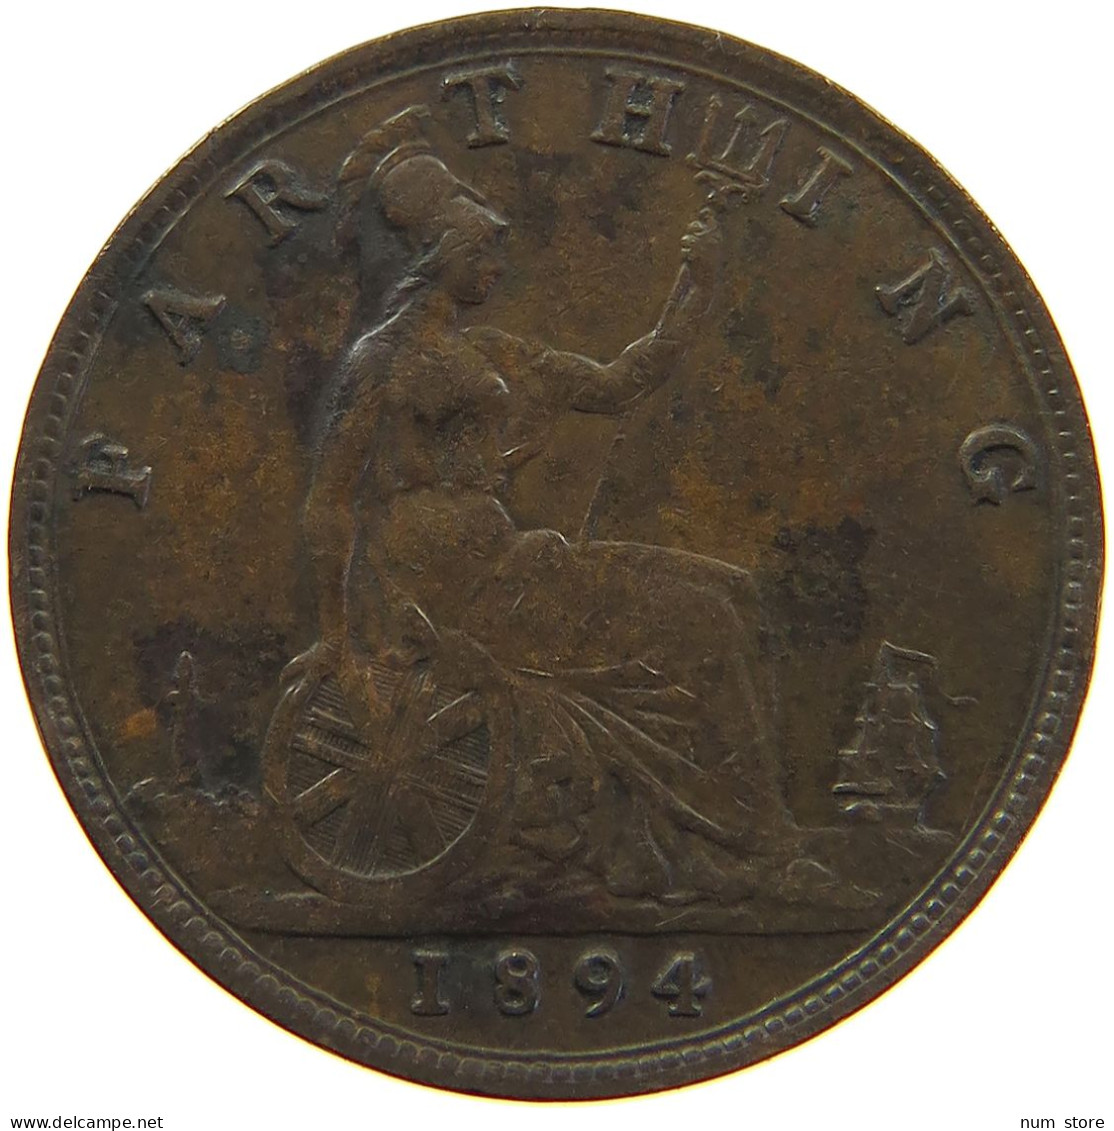 GREAT BRITAIN FARTHING 1894 Victoria 1837-1901 #s010 0153 - B. 1 Farthing